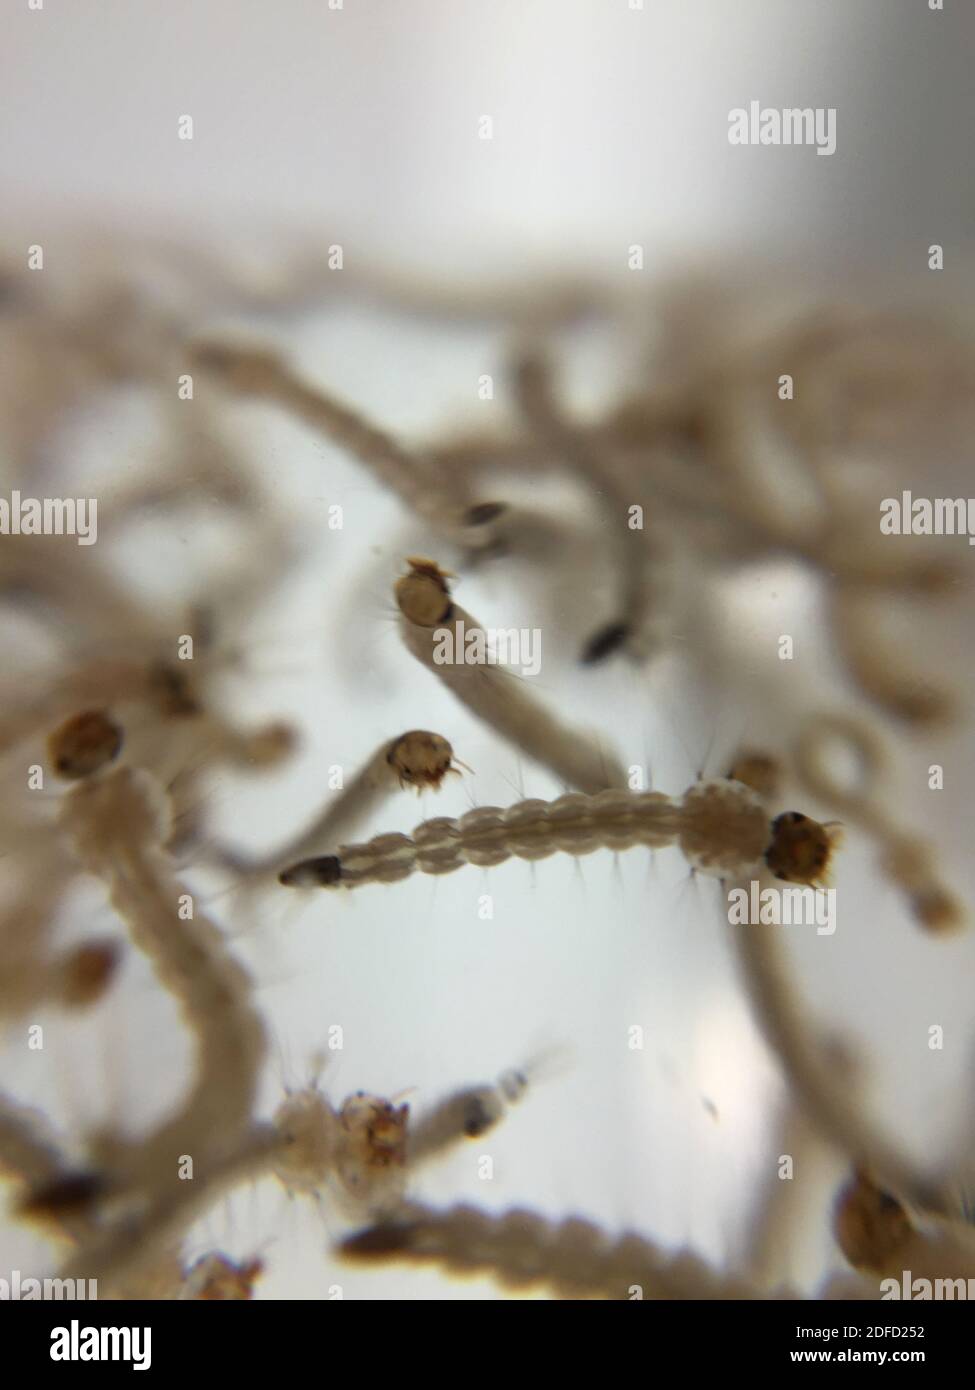 Aedes aegypti mosquito larvae Stock Photo